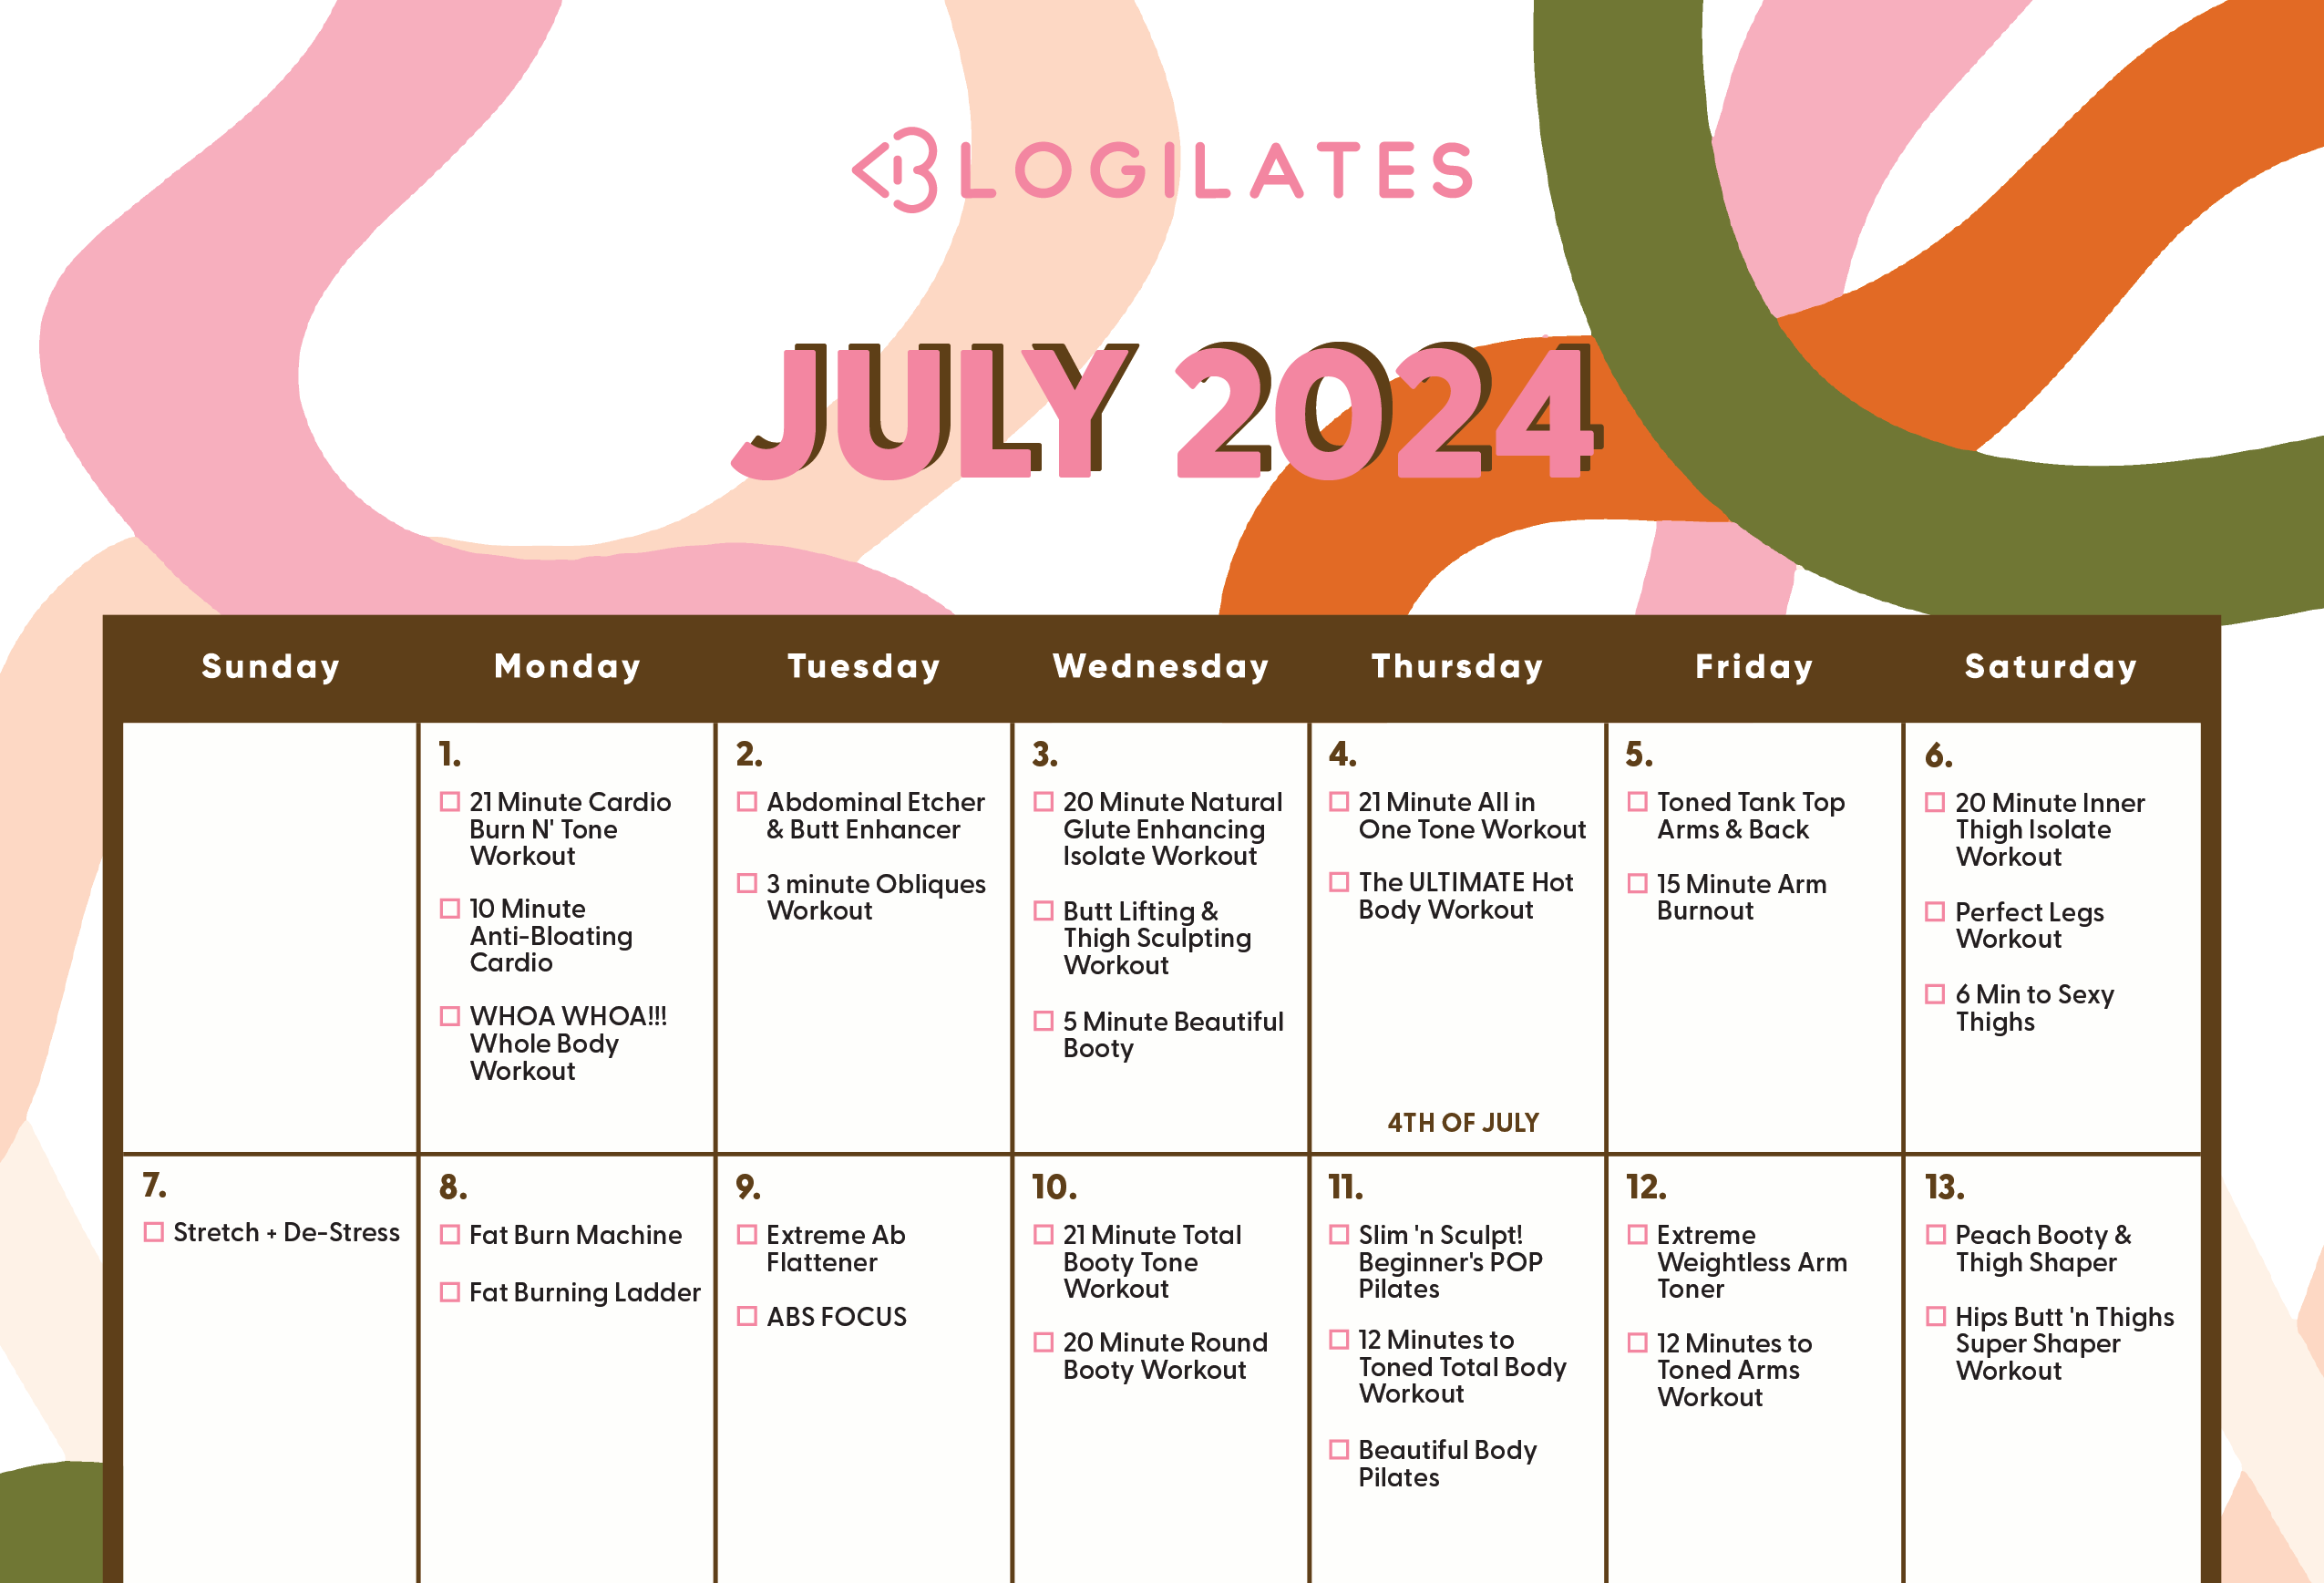 Your Blogilates July 2024 Workout Calendar!!